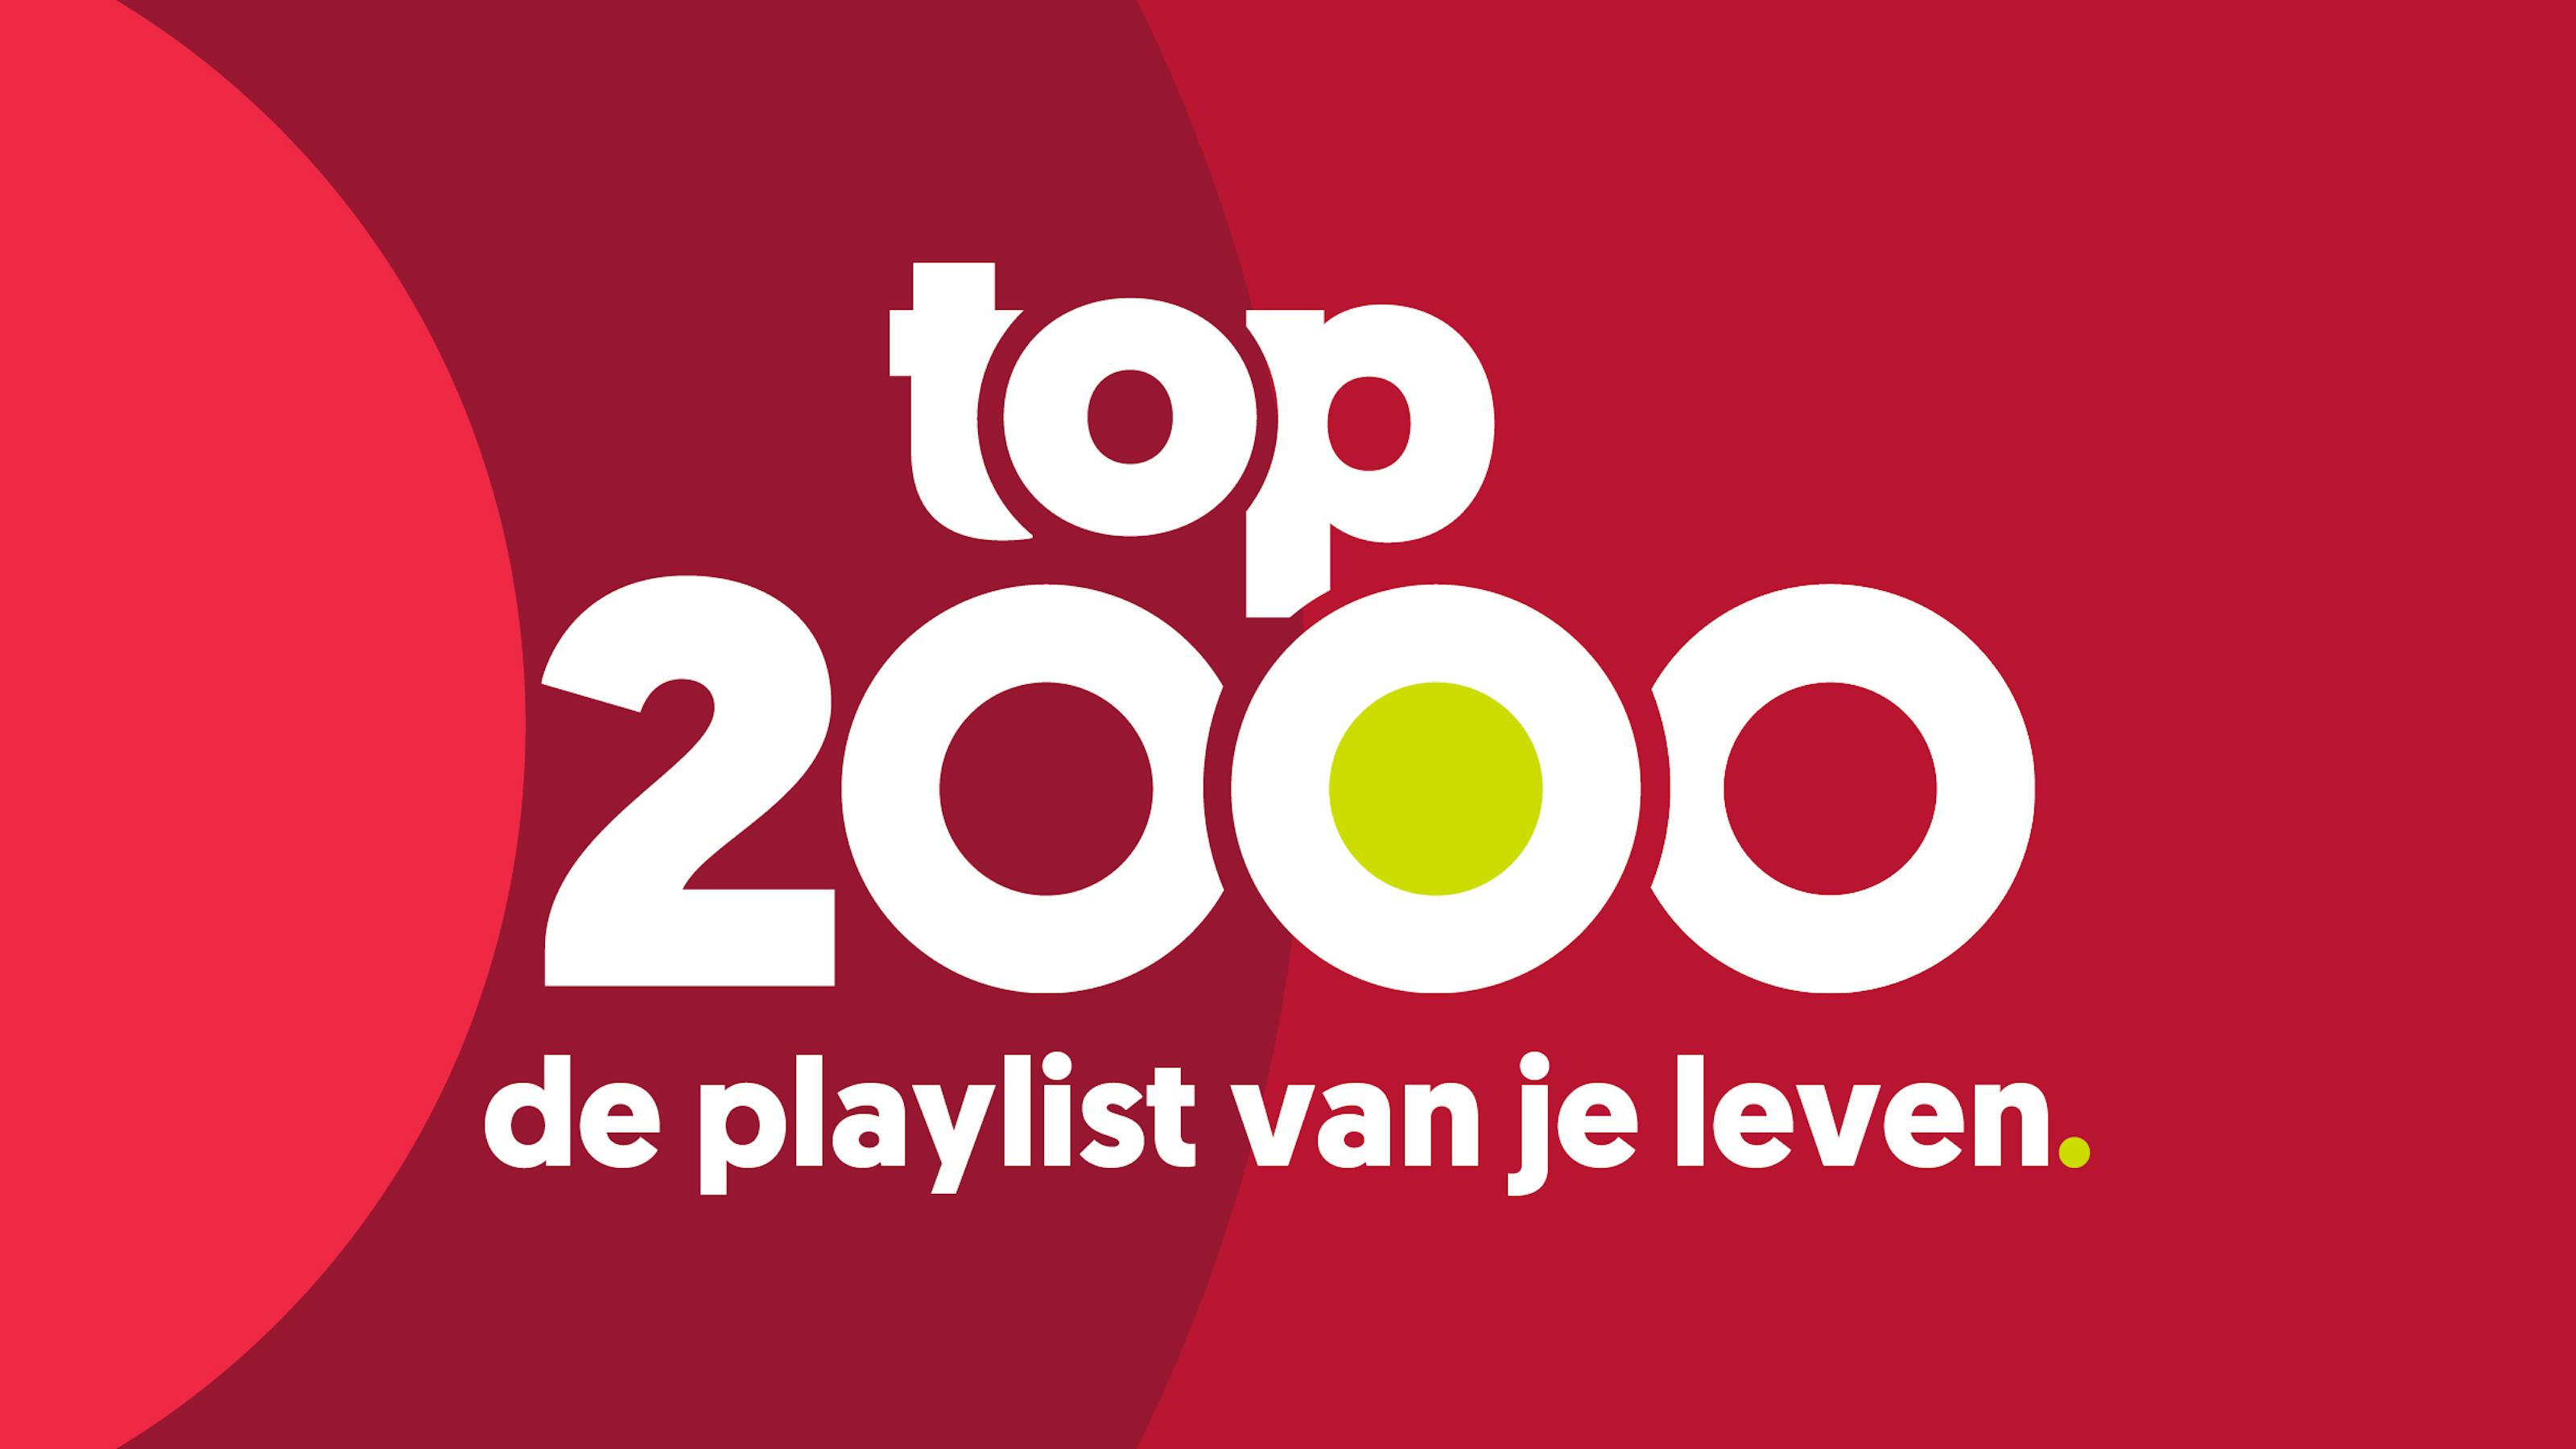 Joe - Top 2000